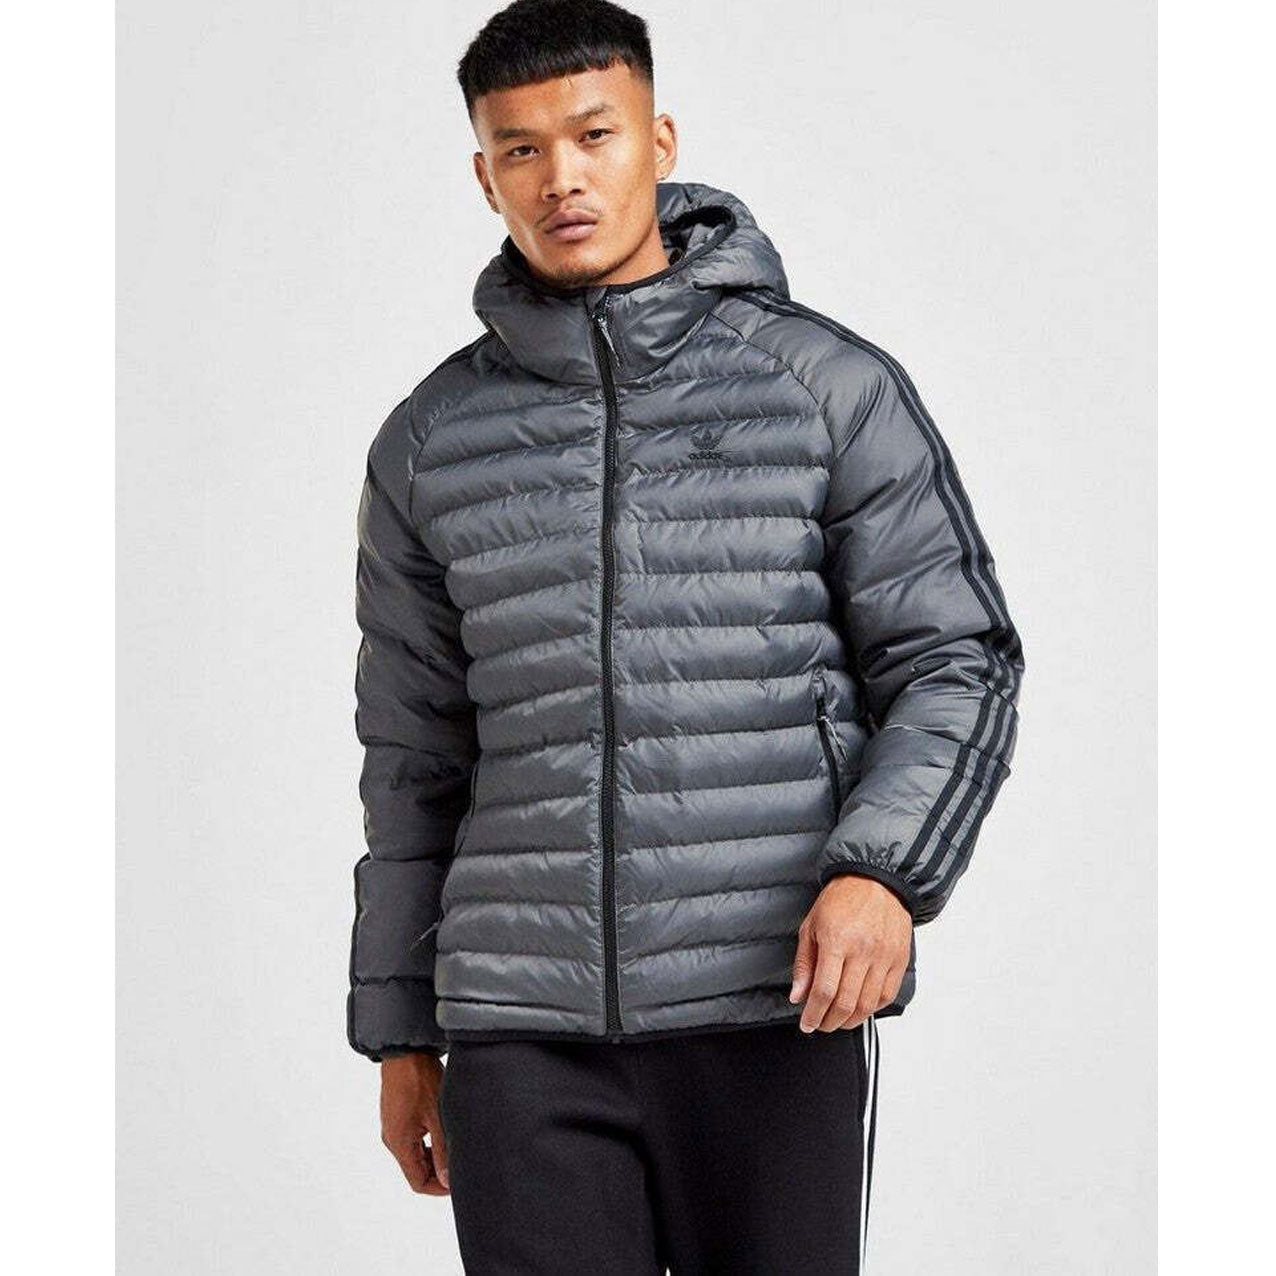 Adidas Jacket Mens Padded Jacket Coat Full Zip Dark Grey/Black Winter Jacket - MRGOUTLETS